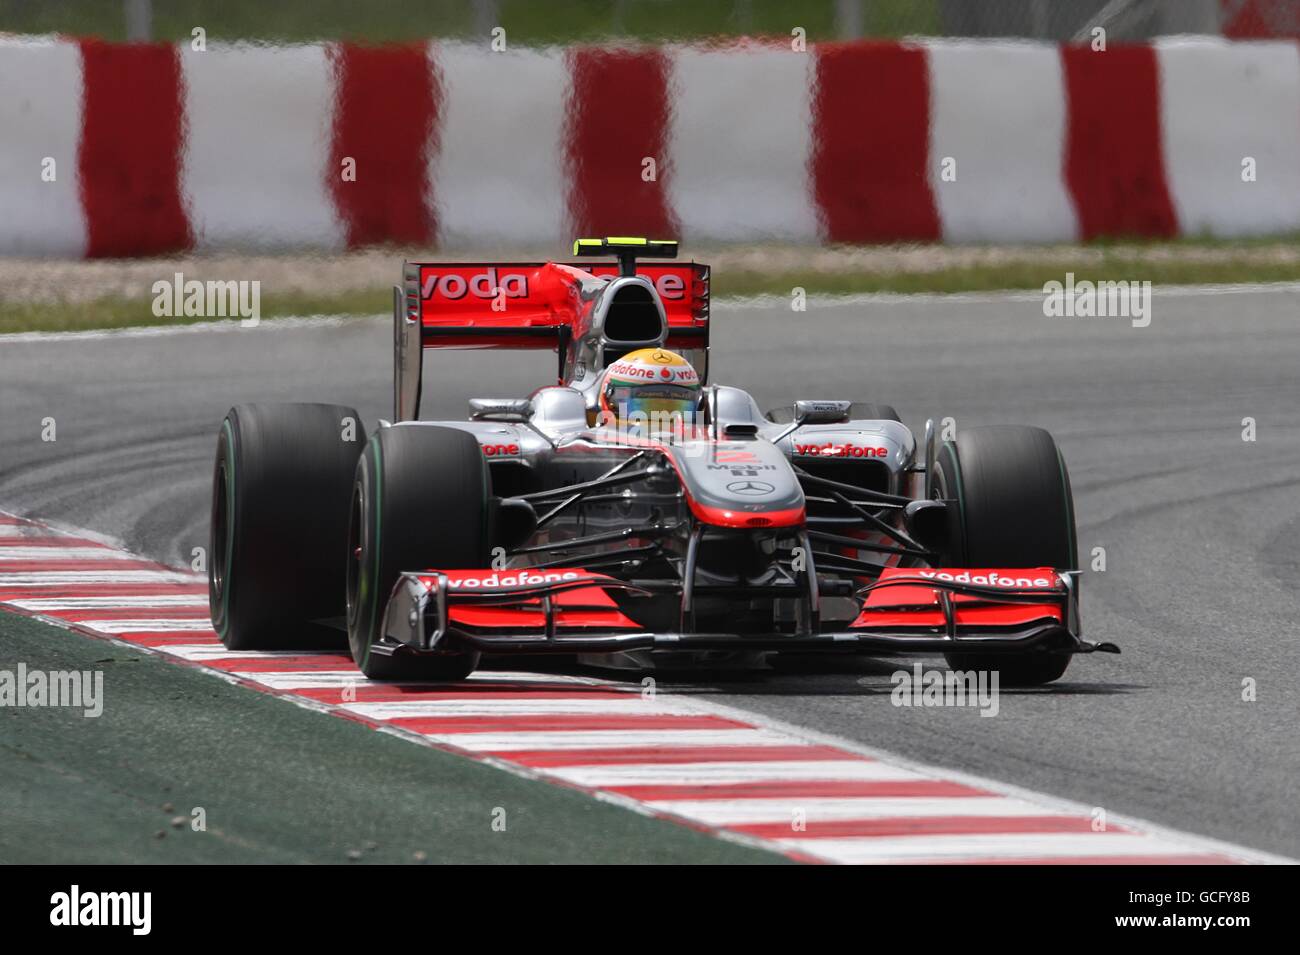 McLaren's Lewis Hamilton leads during the Spanish Grand Prix Stock Photo